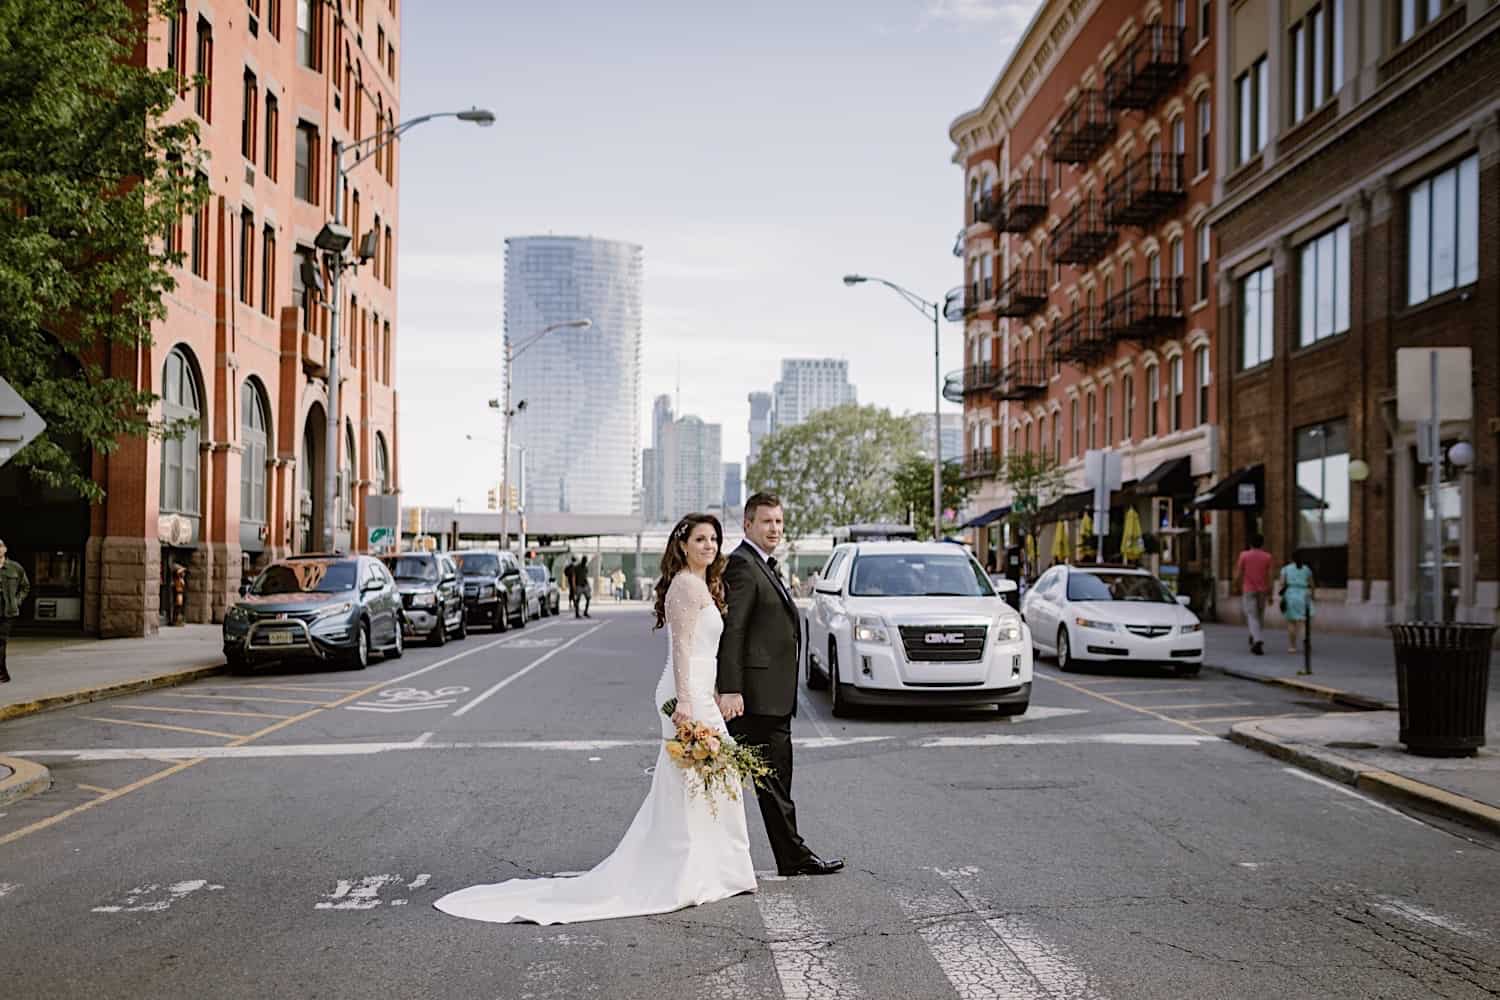 Wedding photos in Hoboken, NJ